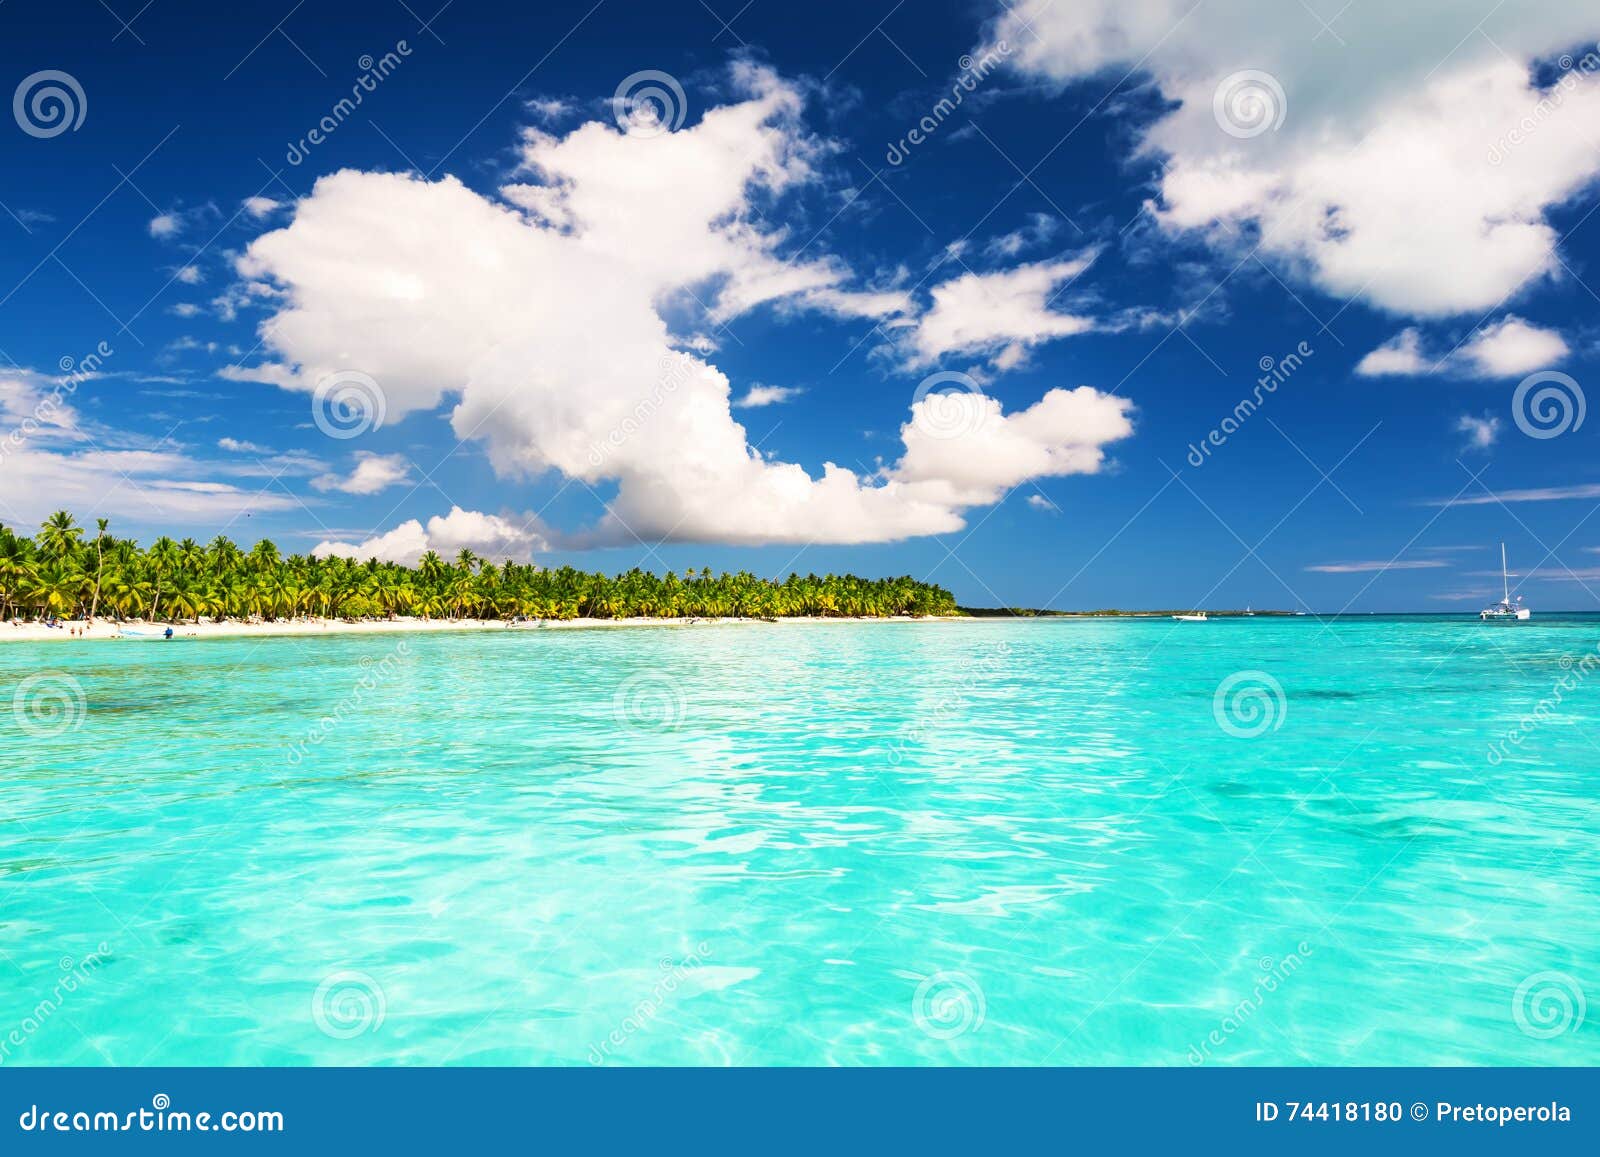 coconut palm trees on white sandy beach in saona island, dominic